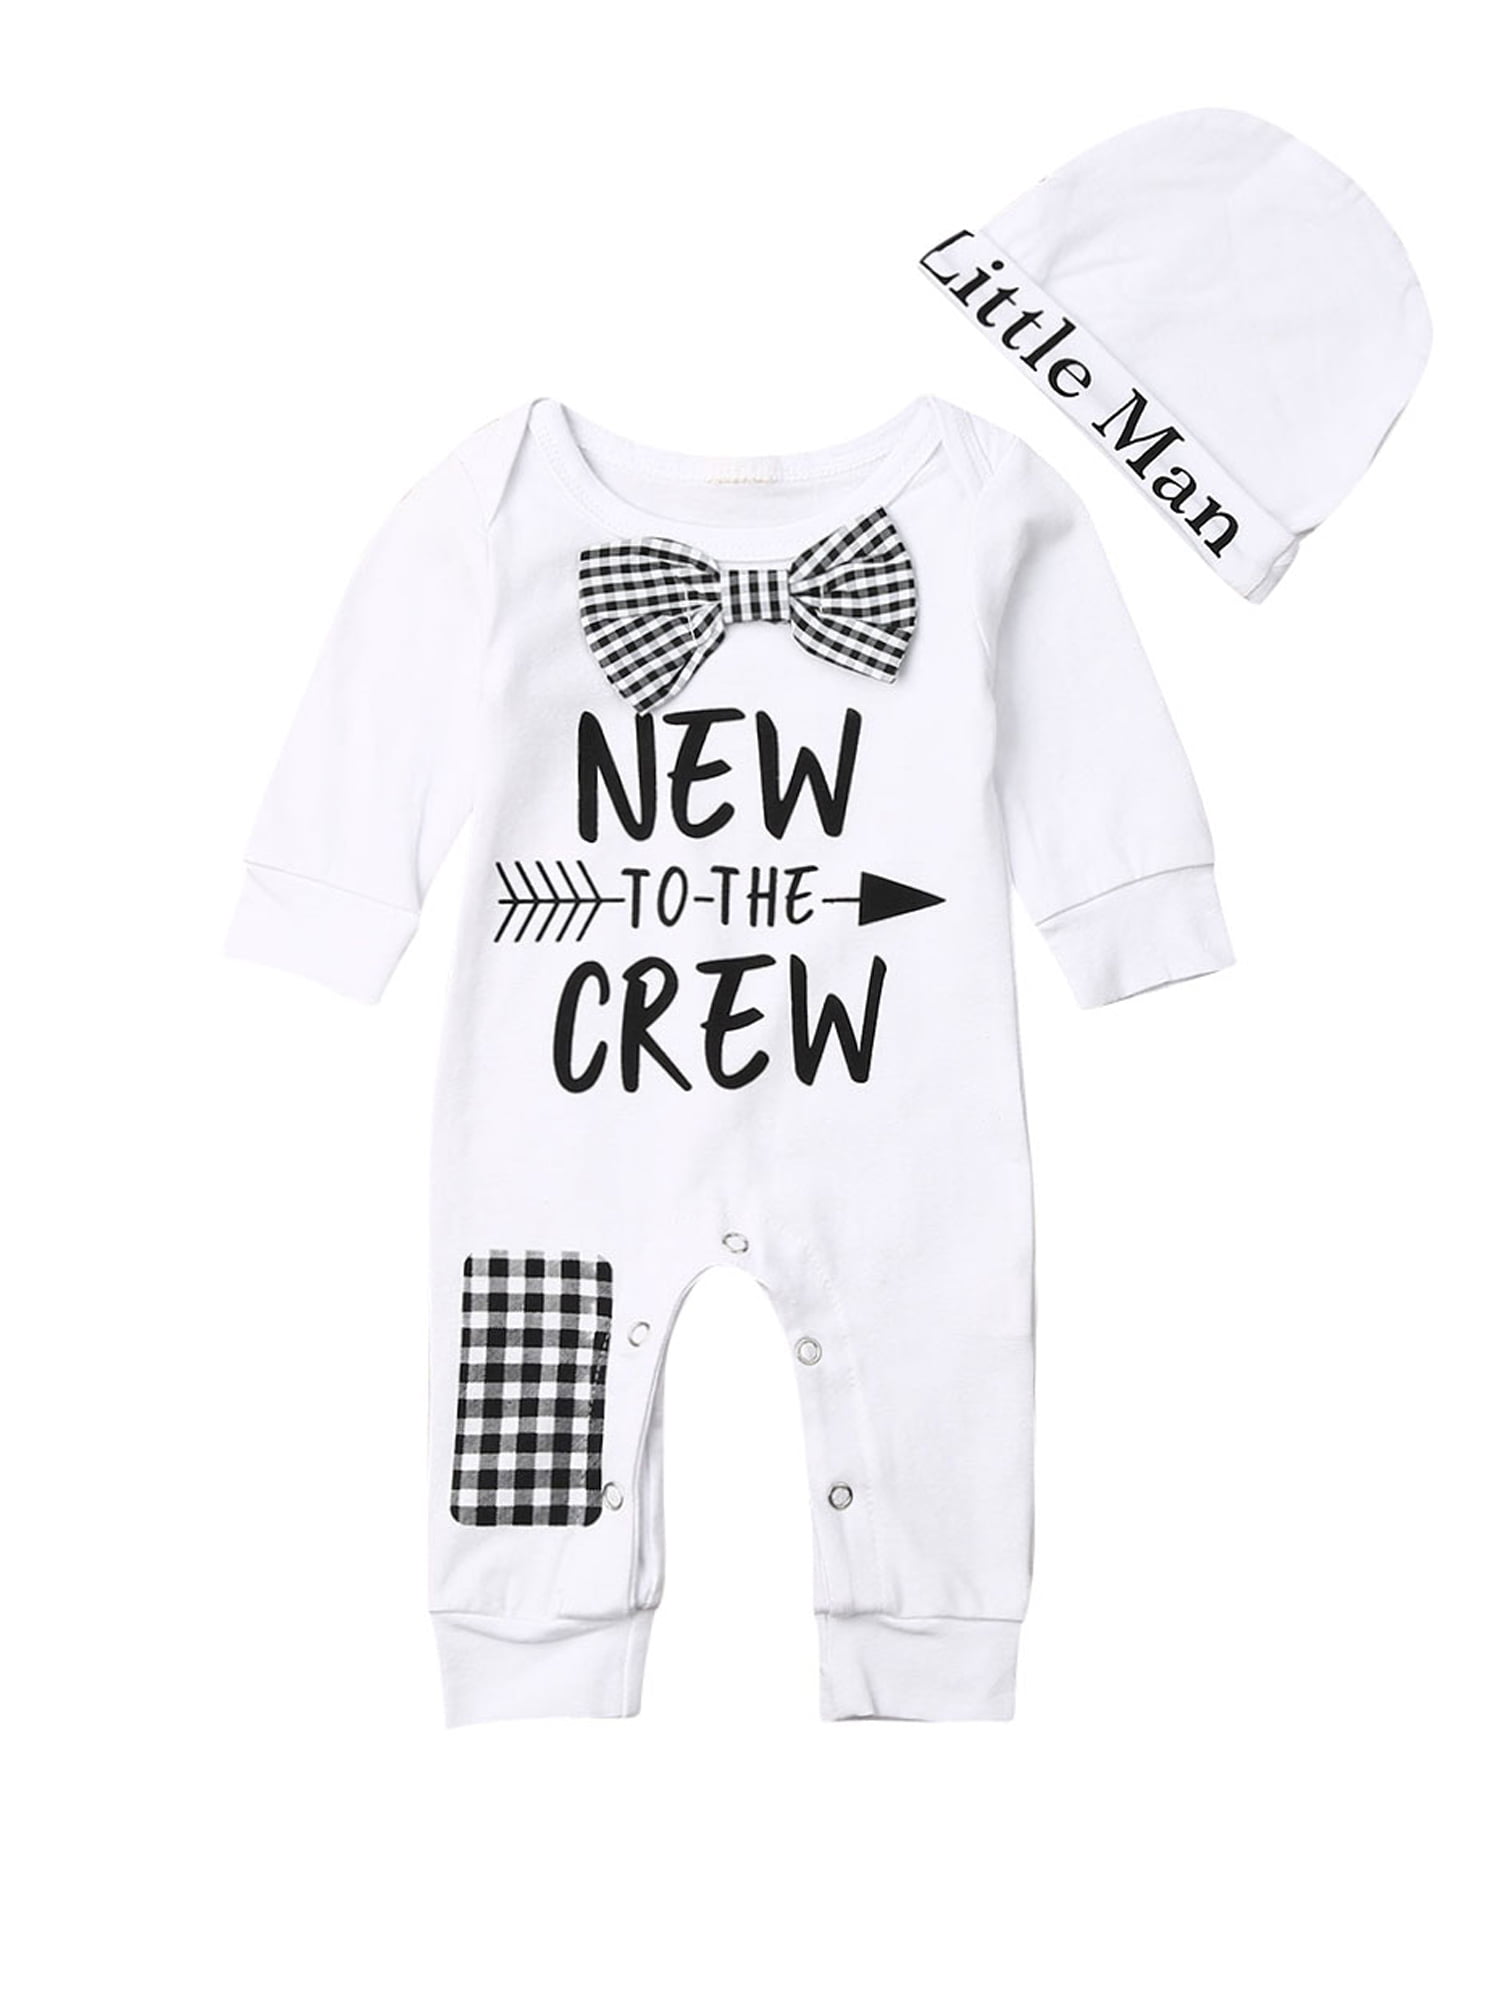 Details about   Newborn Toddler Infant Baby Boys Letter Romper Jumpsuit Playsuit Bodysuit Outfit 